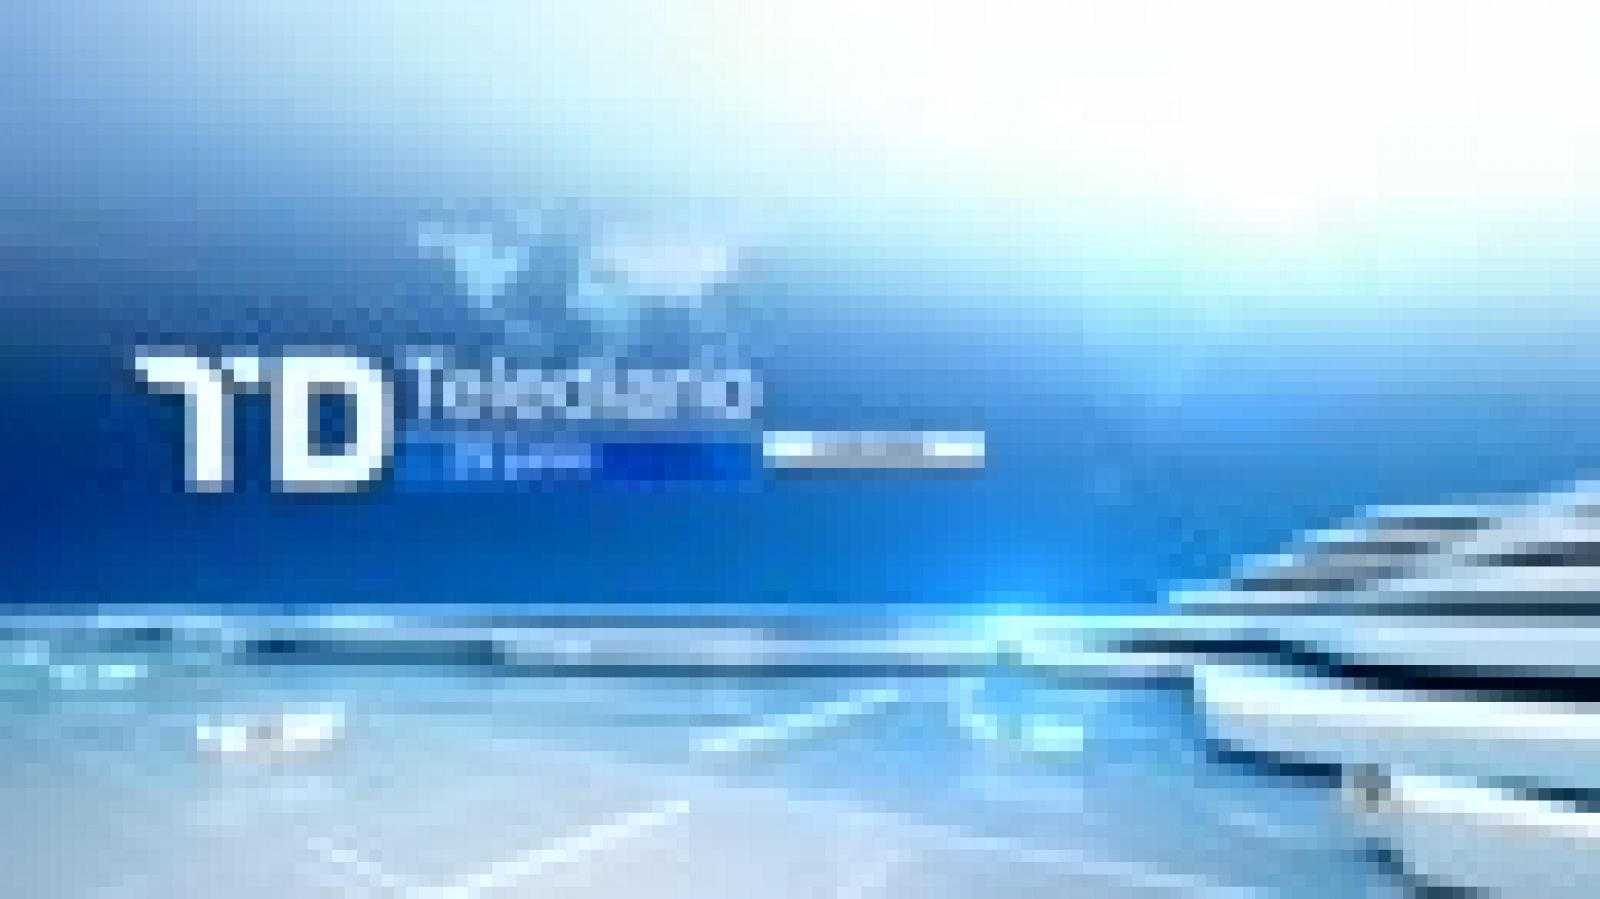 Telediario 1: Telediario Matinal en 4' 29/06/16 | RTVE Play